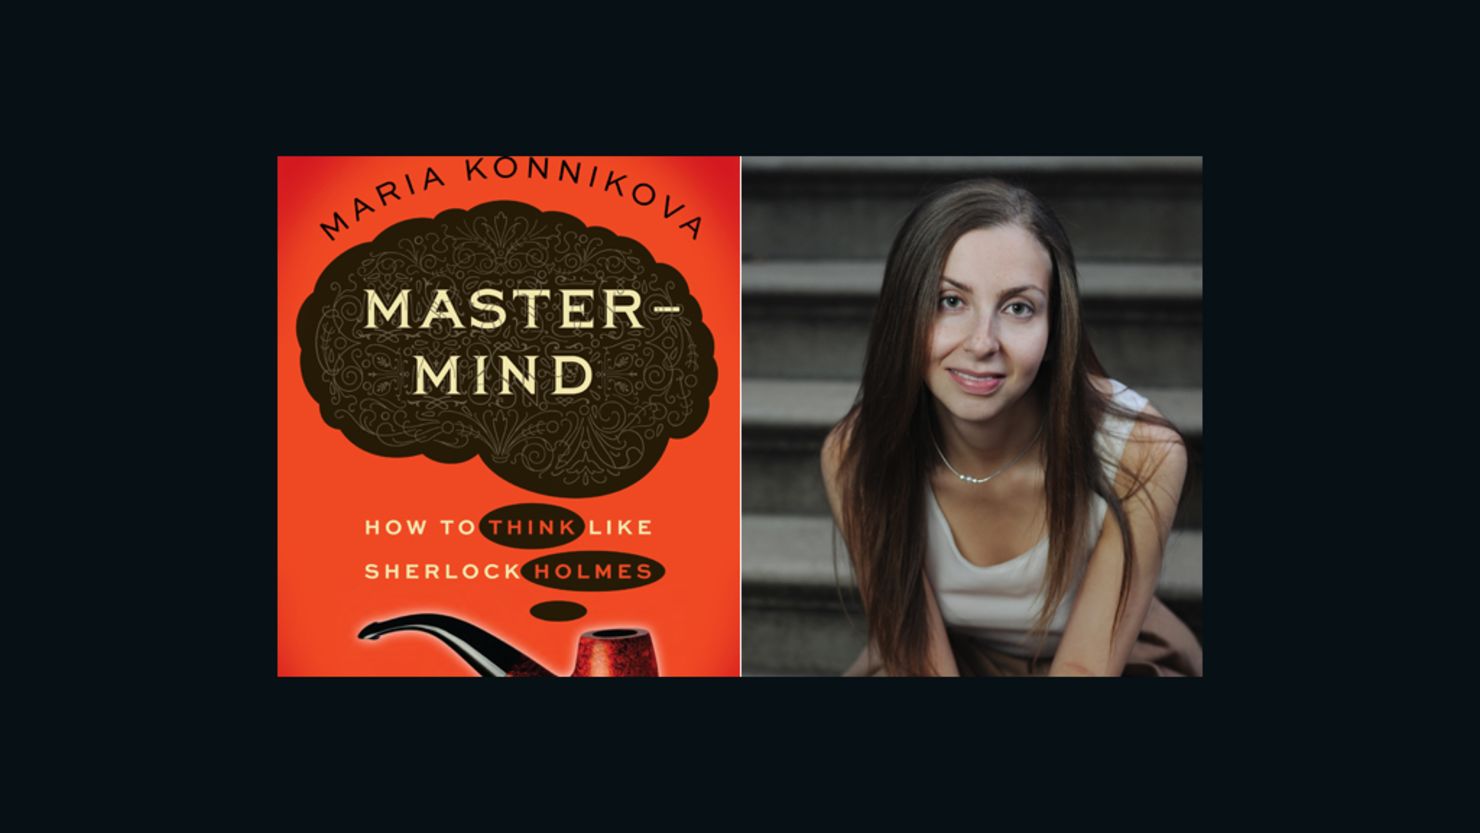 Author Maria Konnikova says multitasking isn't conducive to thinking clearly like Sherlock Holmes.